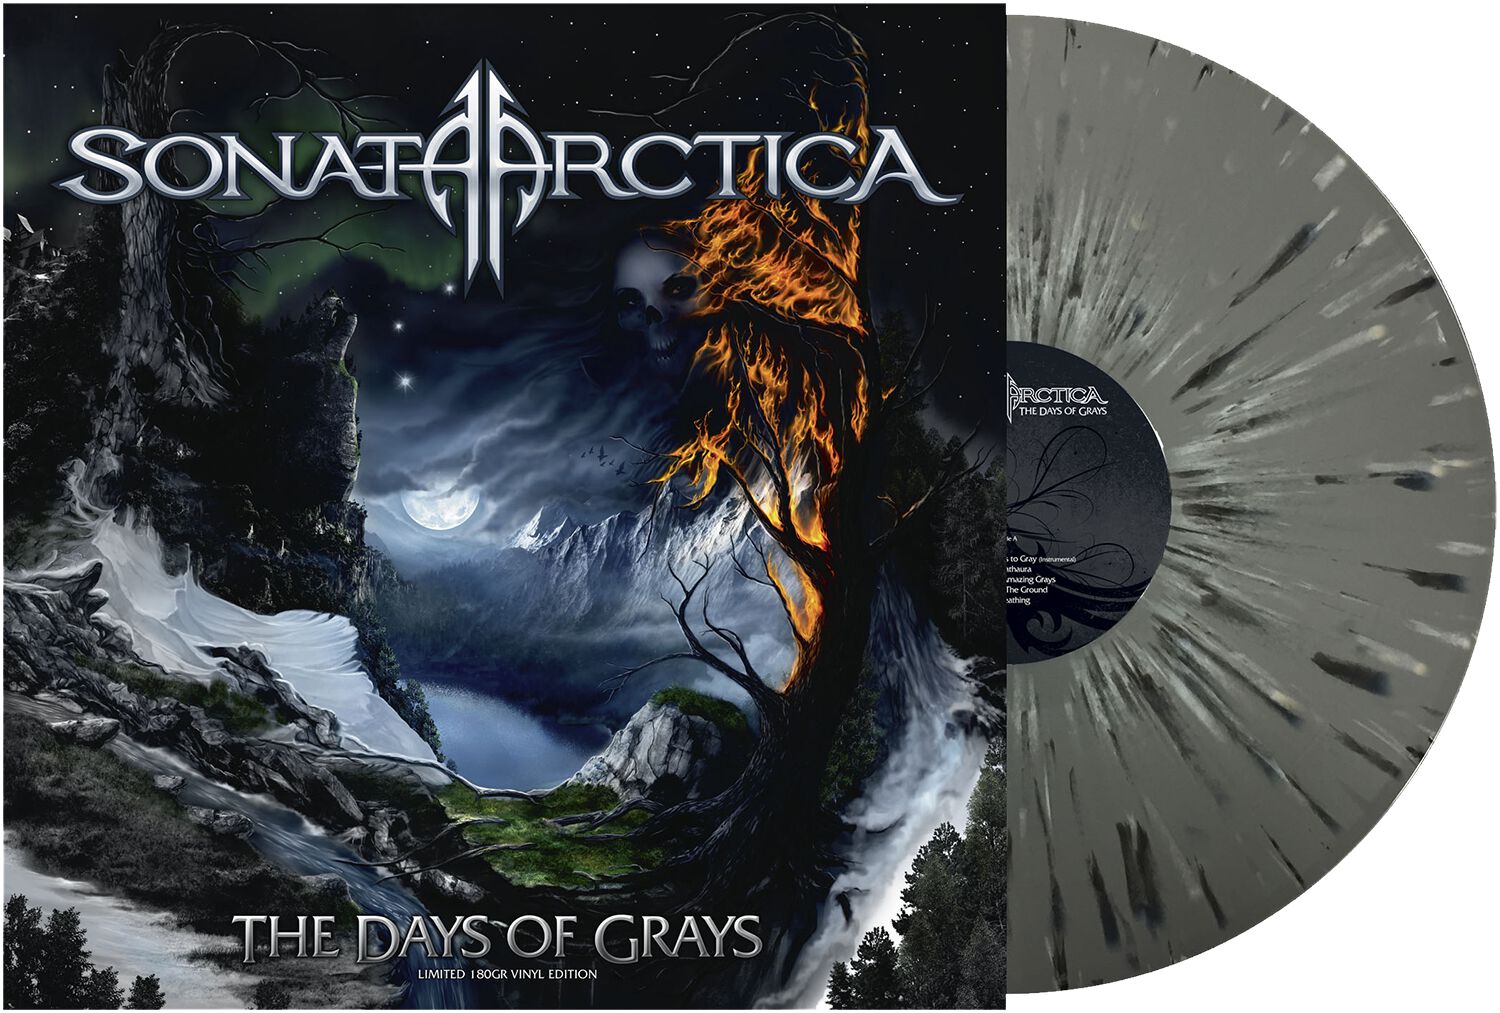 Image of Sonata Arctica The days of grays 2-LP splattered